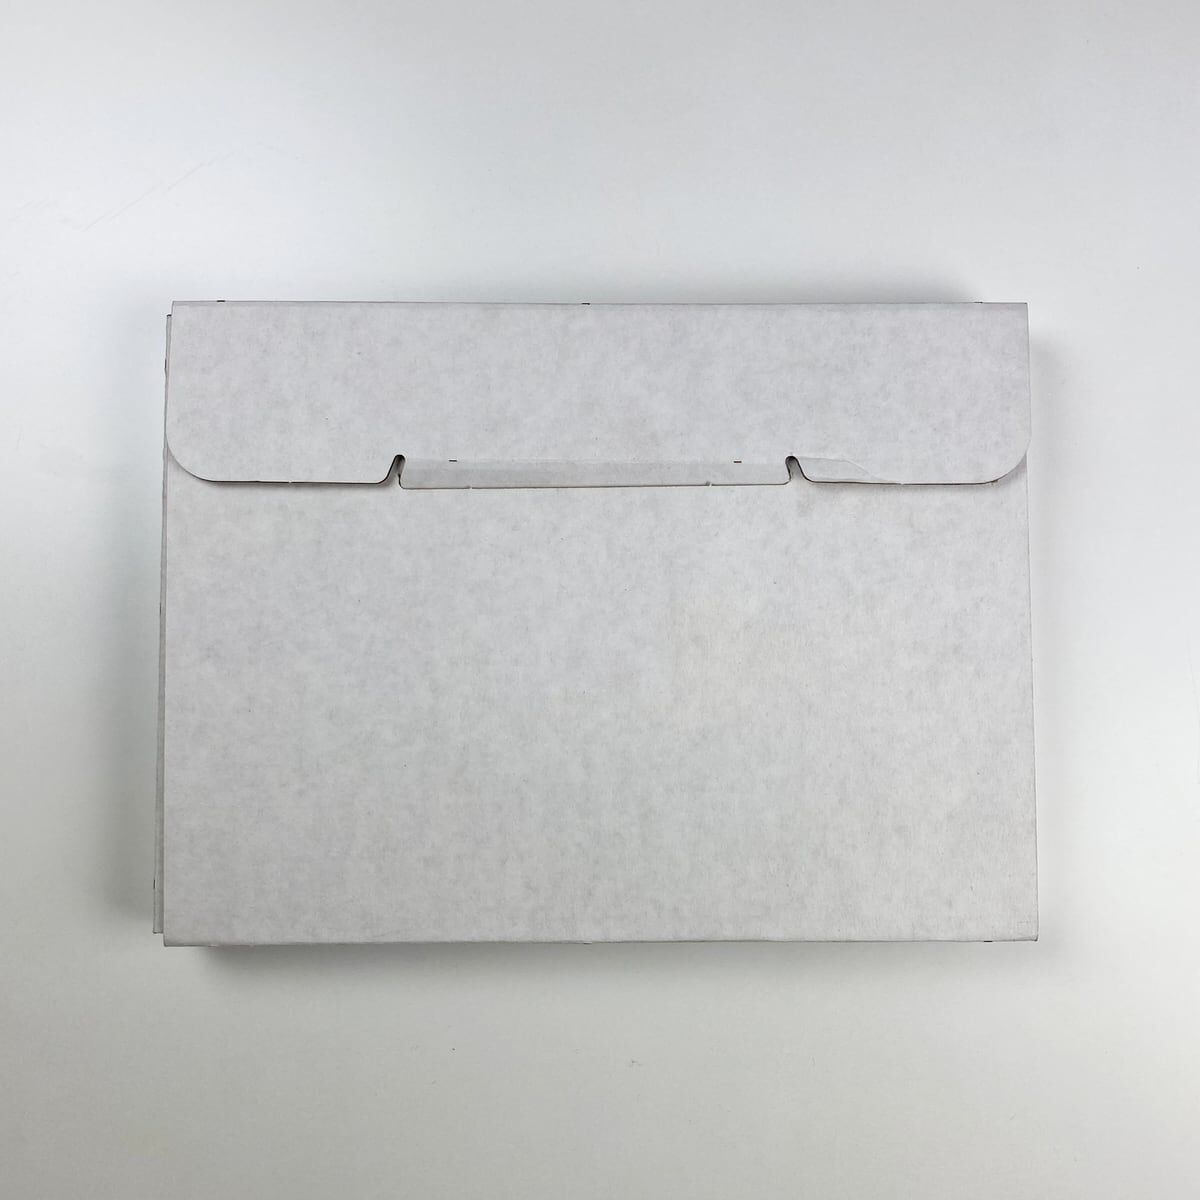 Packaging per calendario trimestrale (310x225x23)